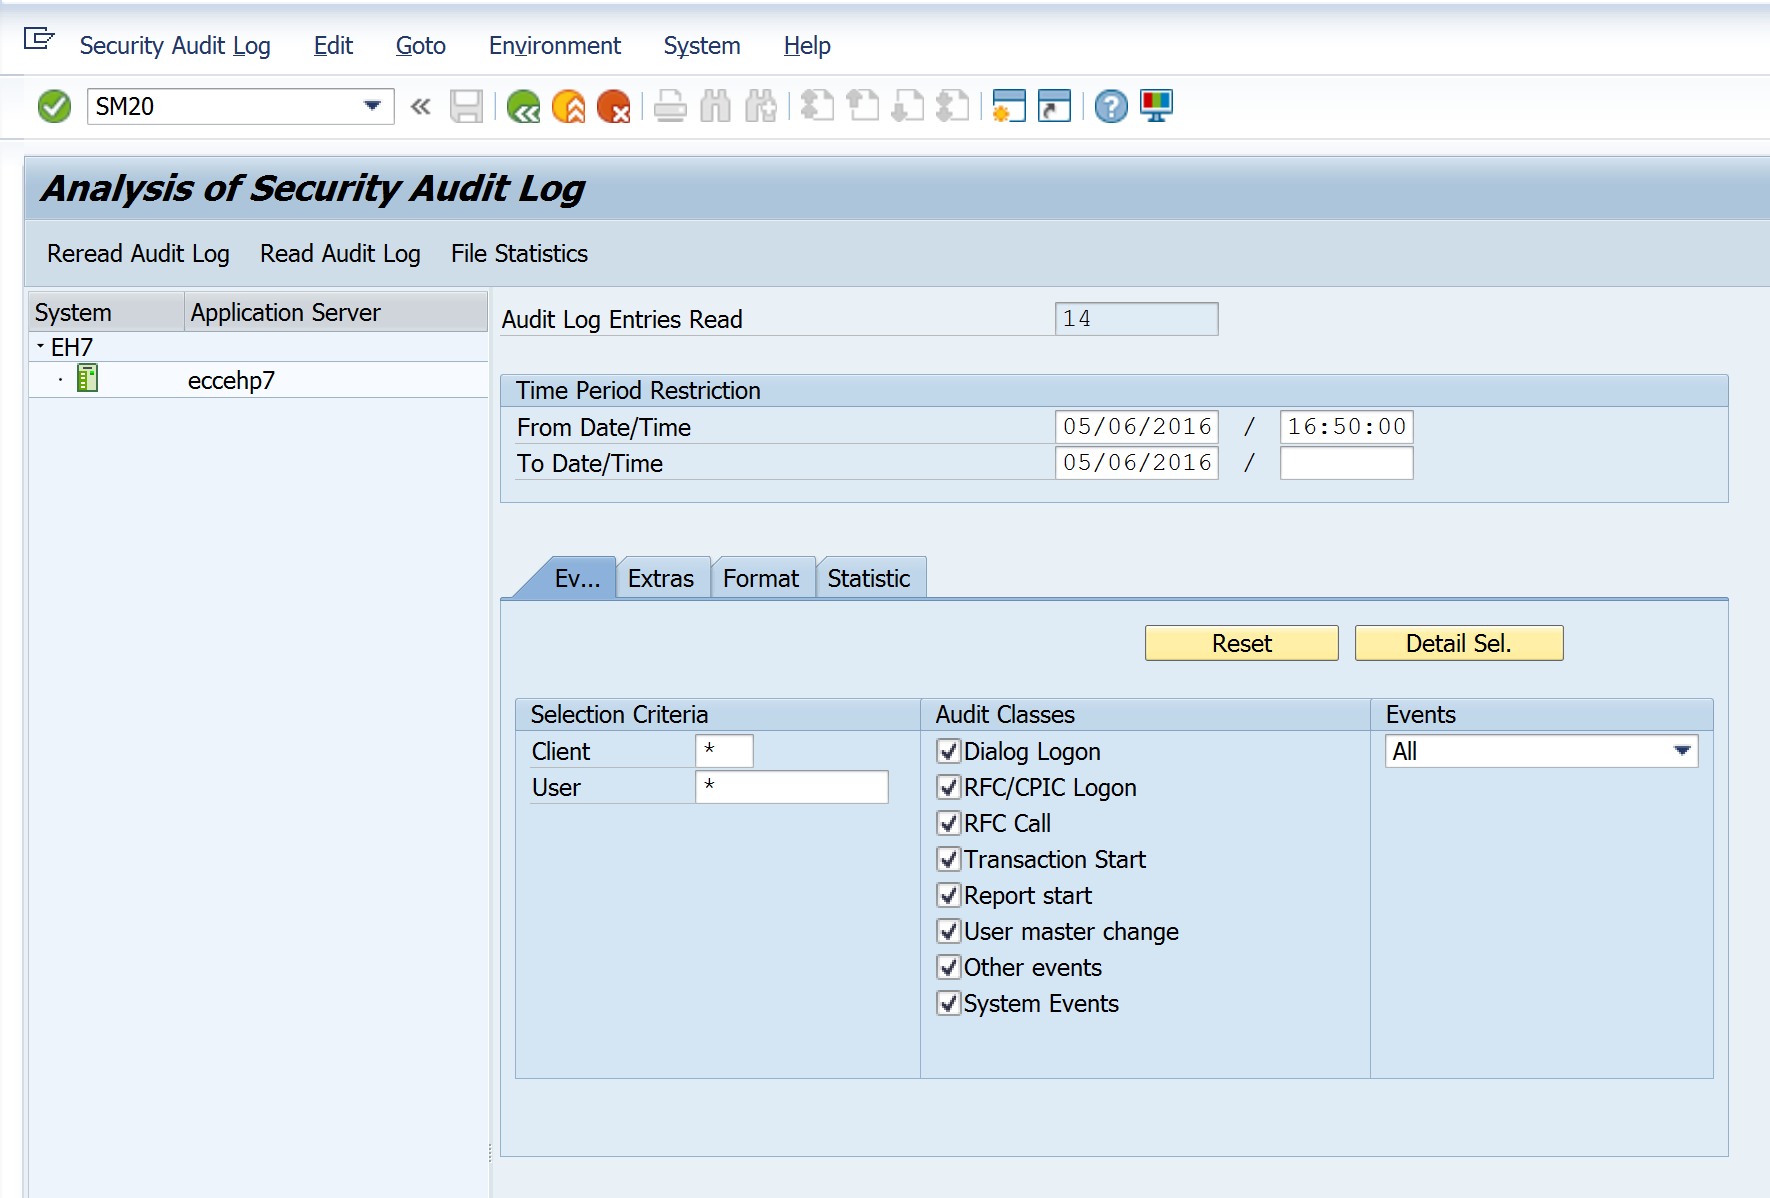 SAP - SM20 - analysis of security audit log